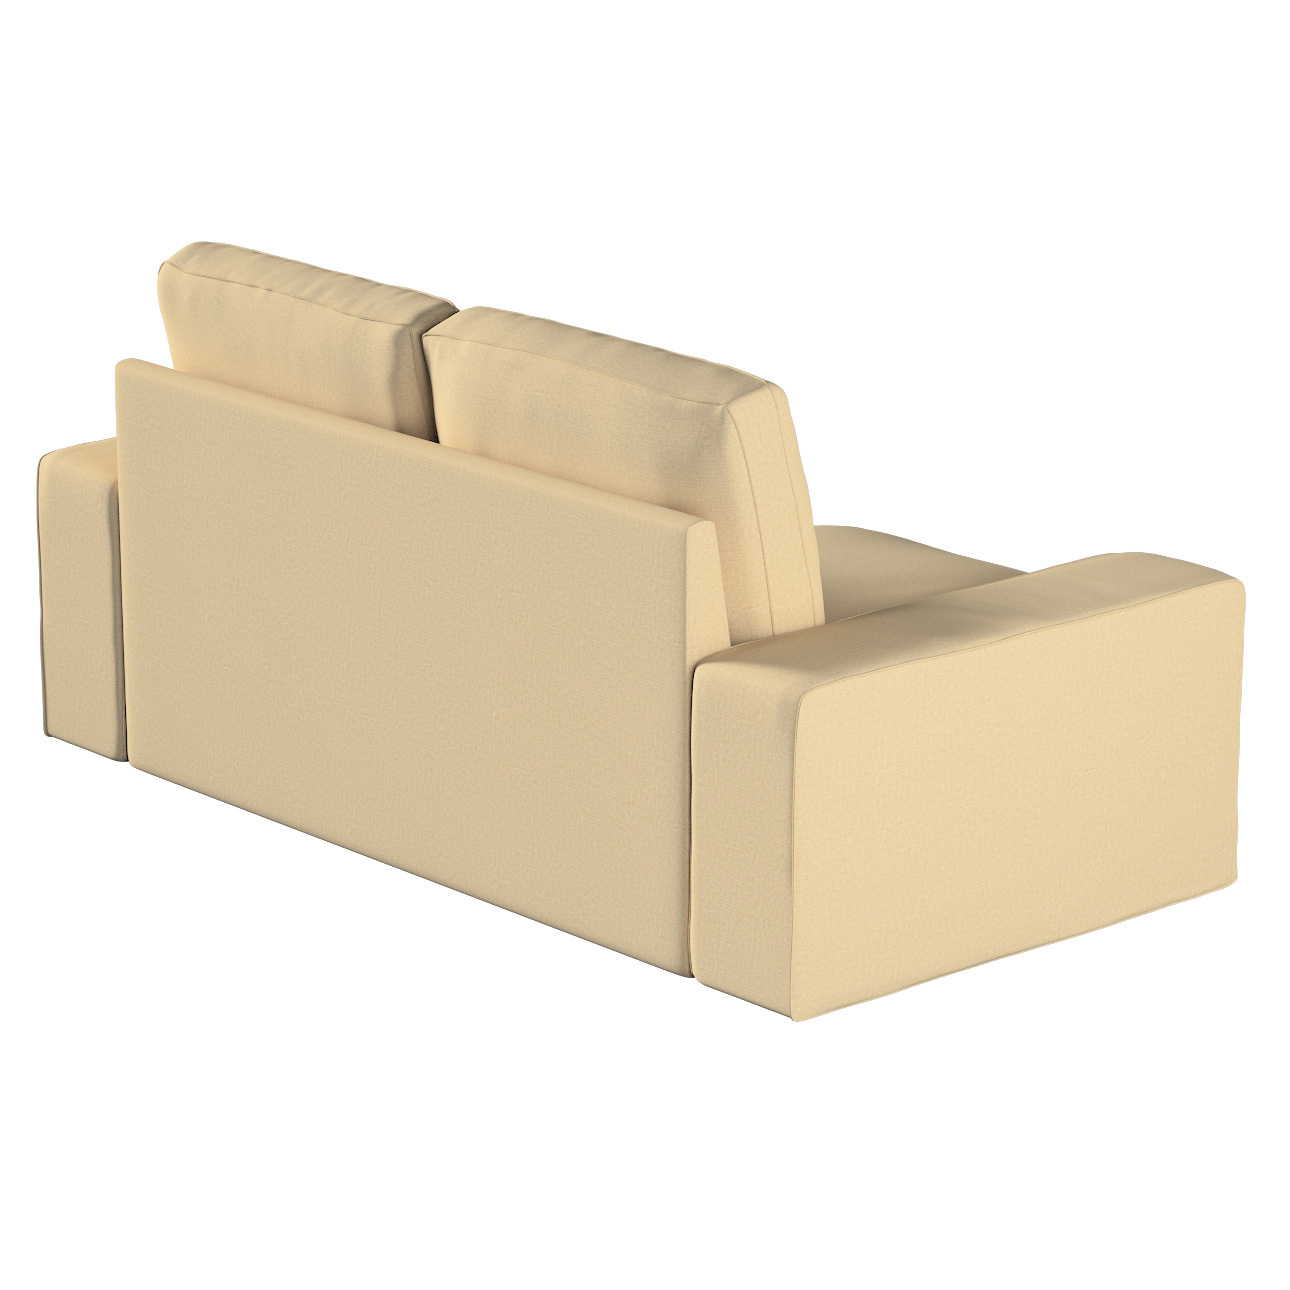 Bezug für Kivik 2-Sitzer Sofa, sandfarben, Bezug für Sofa Kivik 2-Sitzer, C günstig online kaufen